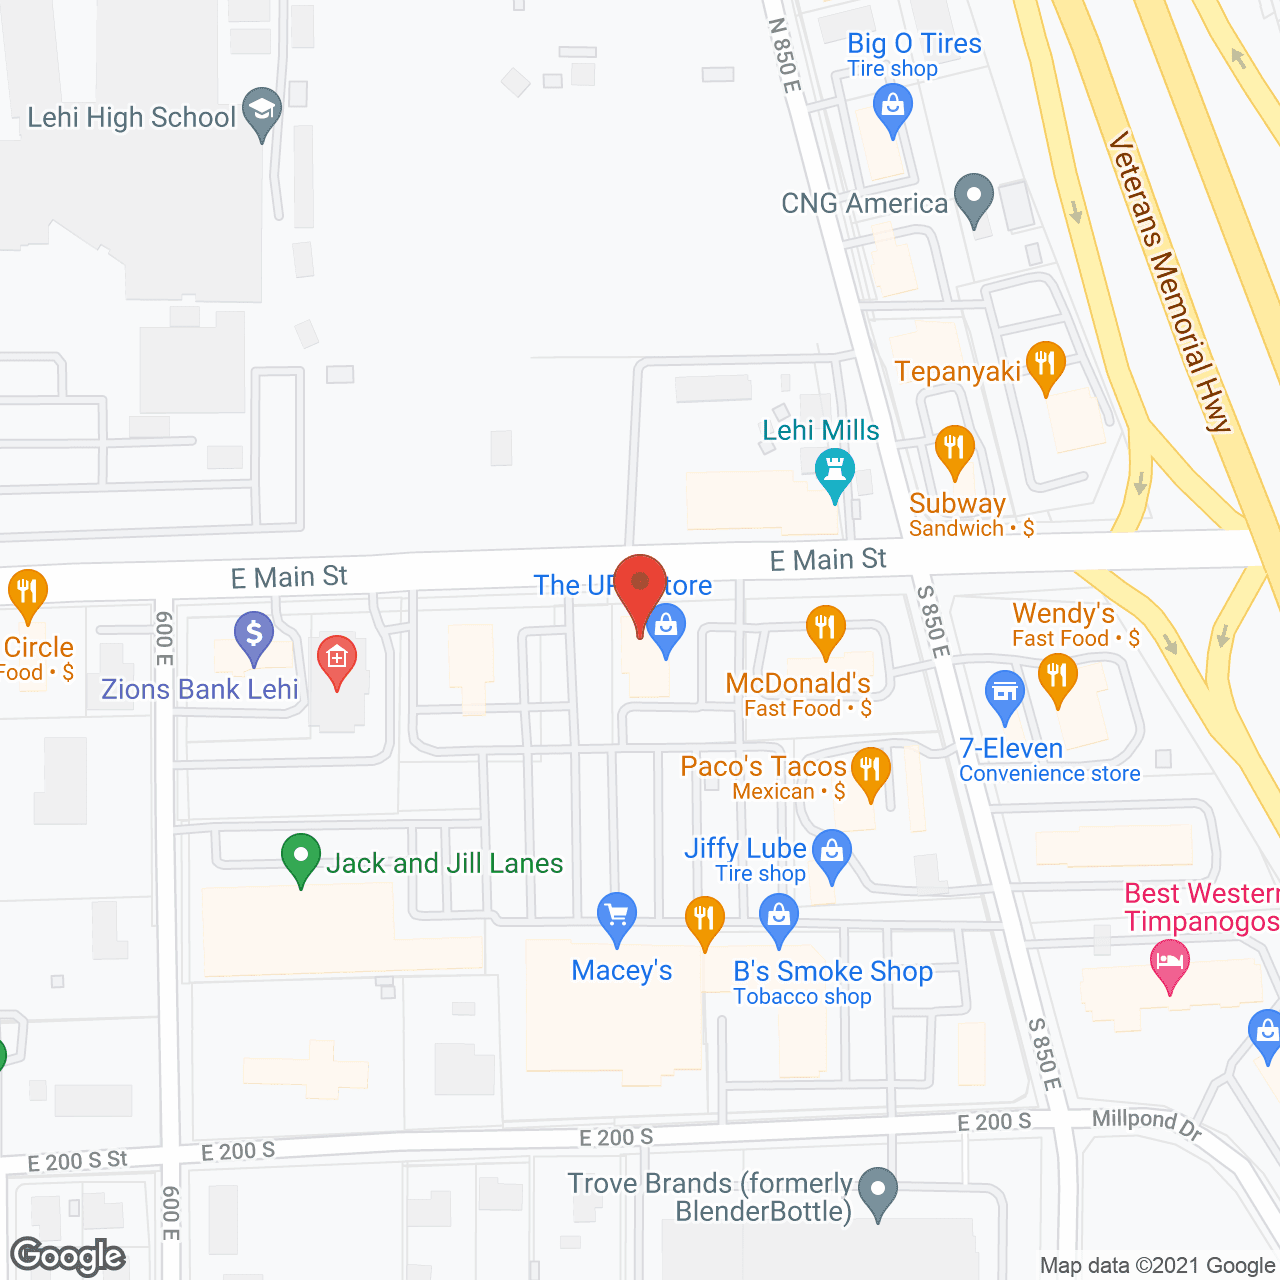 Essential Care in google map